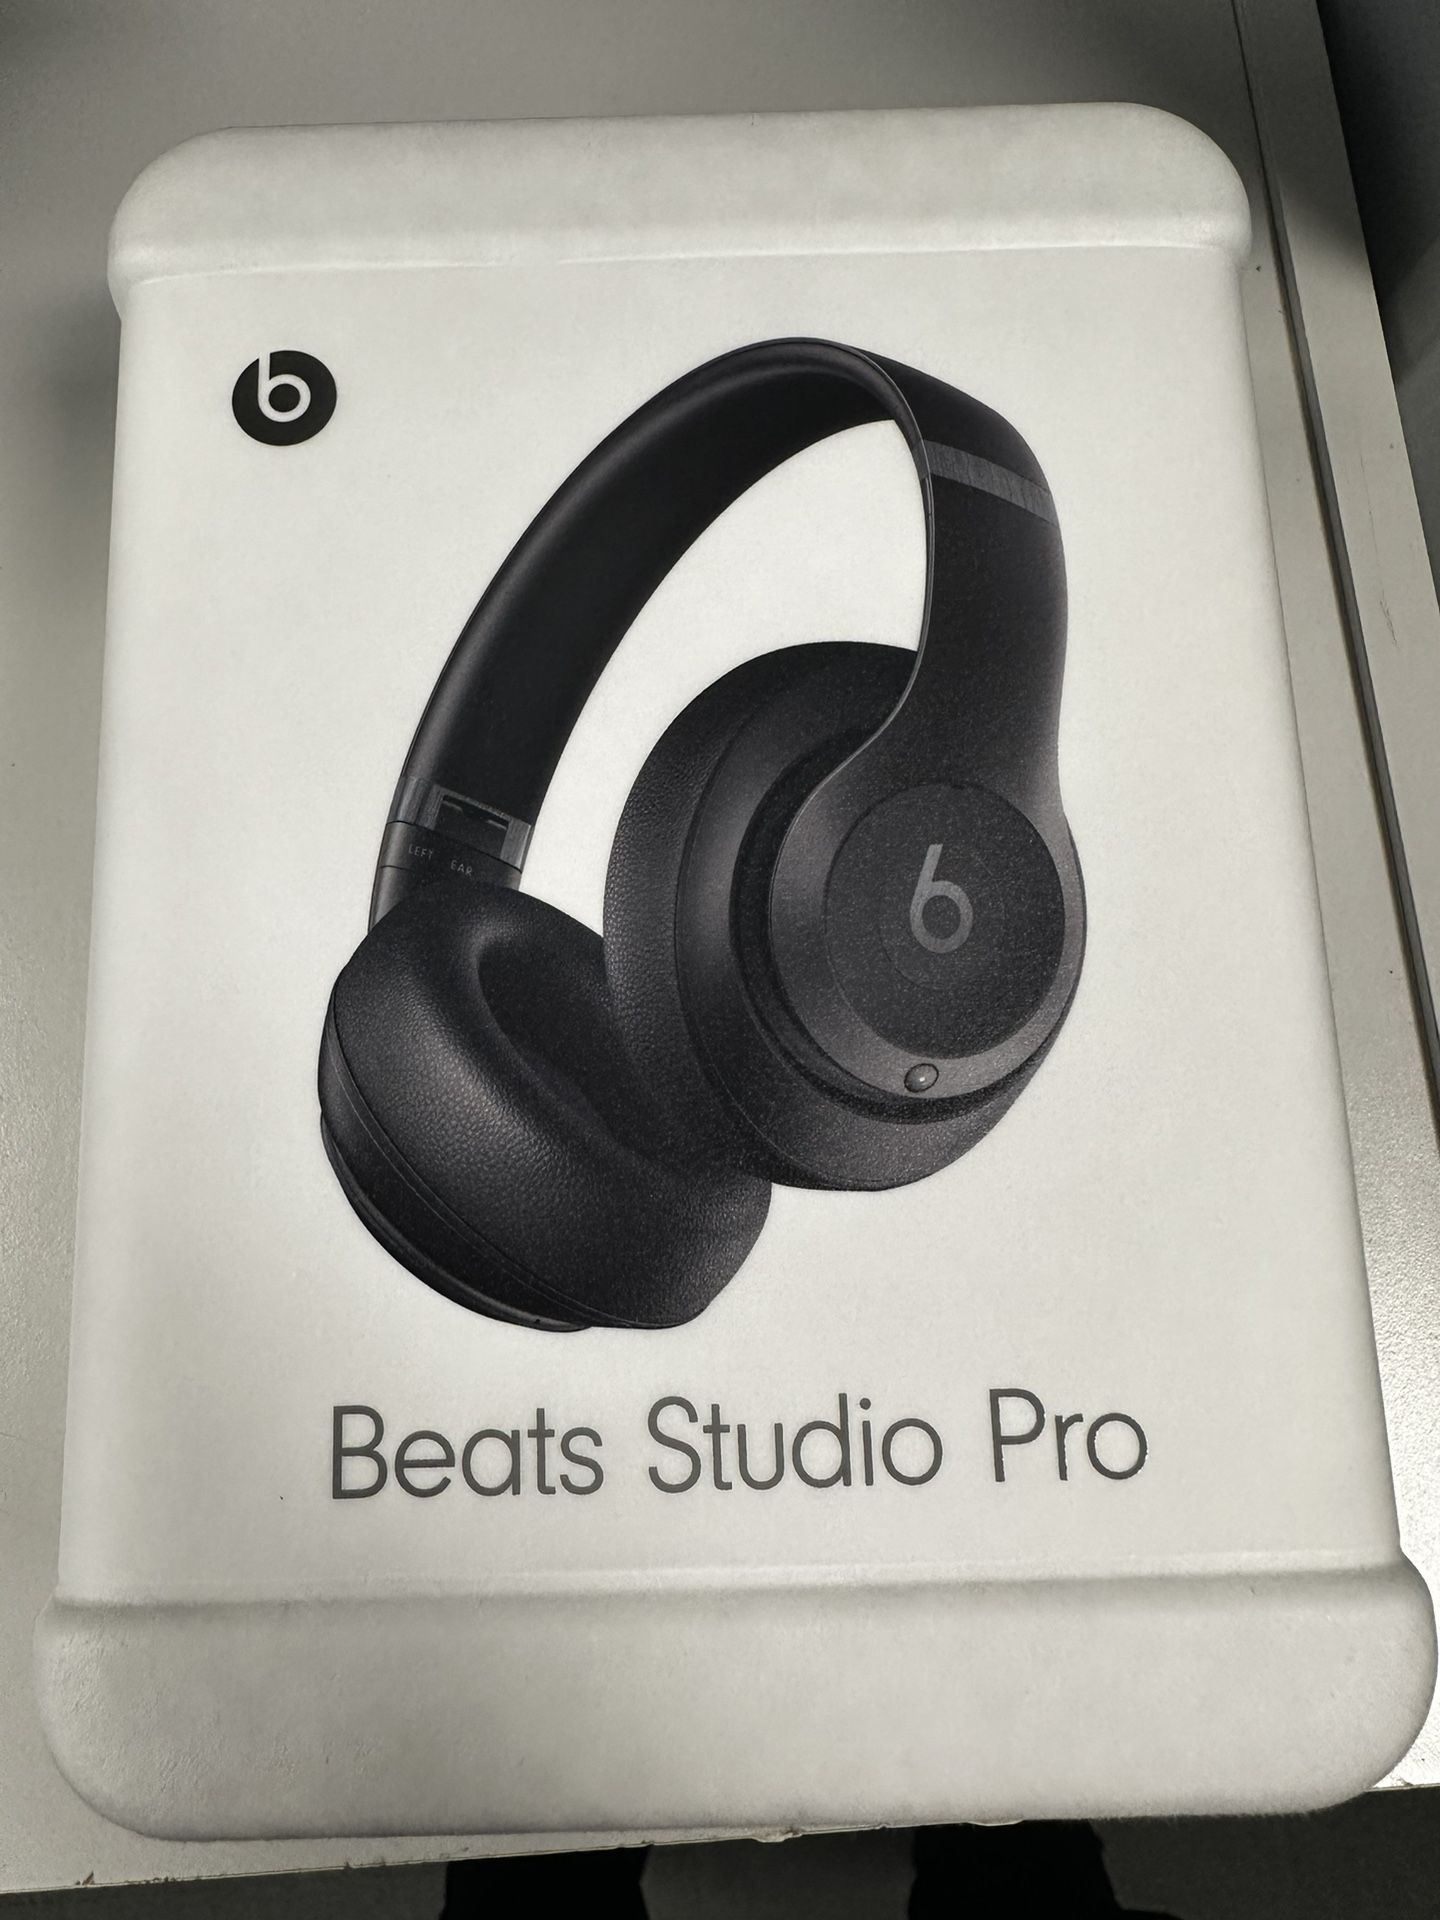 Beats Studio Pro $250 Obo